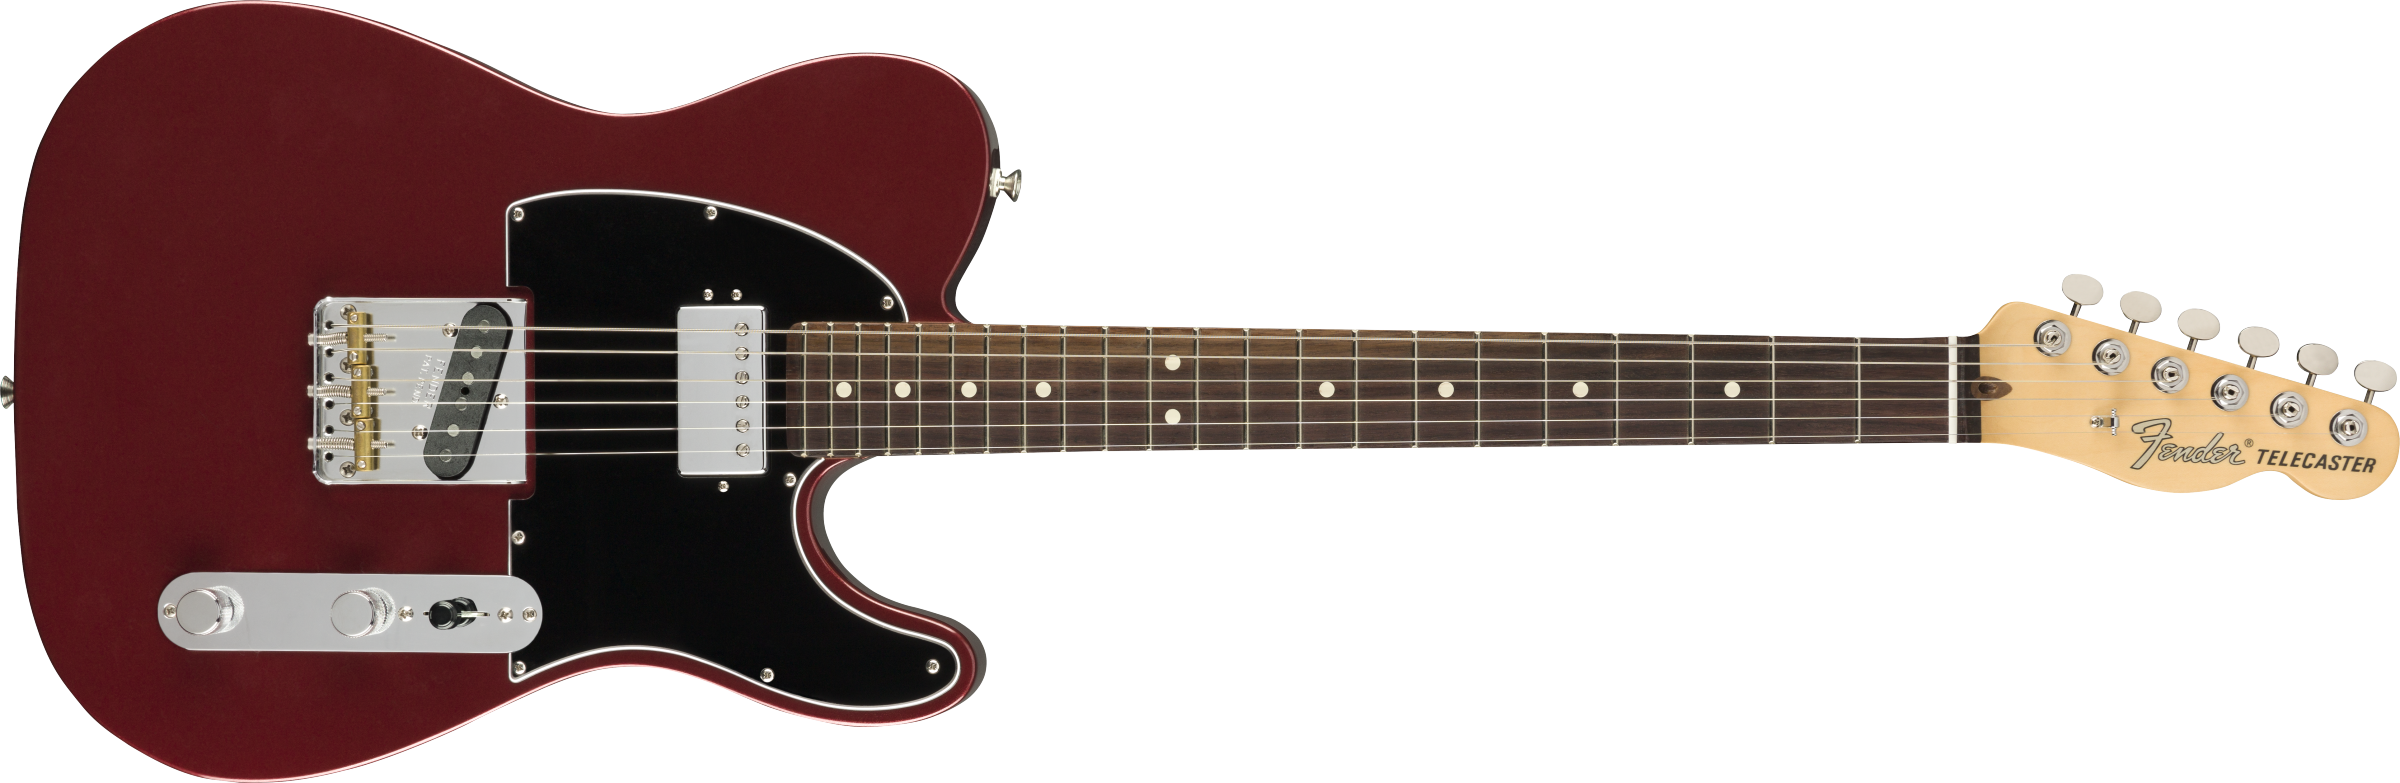 Fender® American Performer Telecaster® with Humbucking, Rosewood Fingerboard, Aubergine